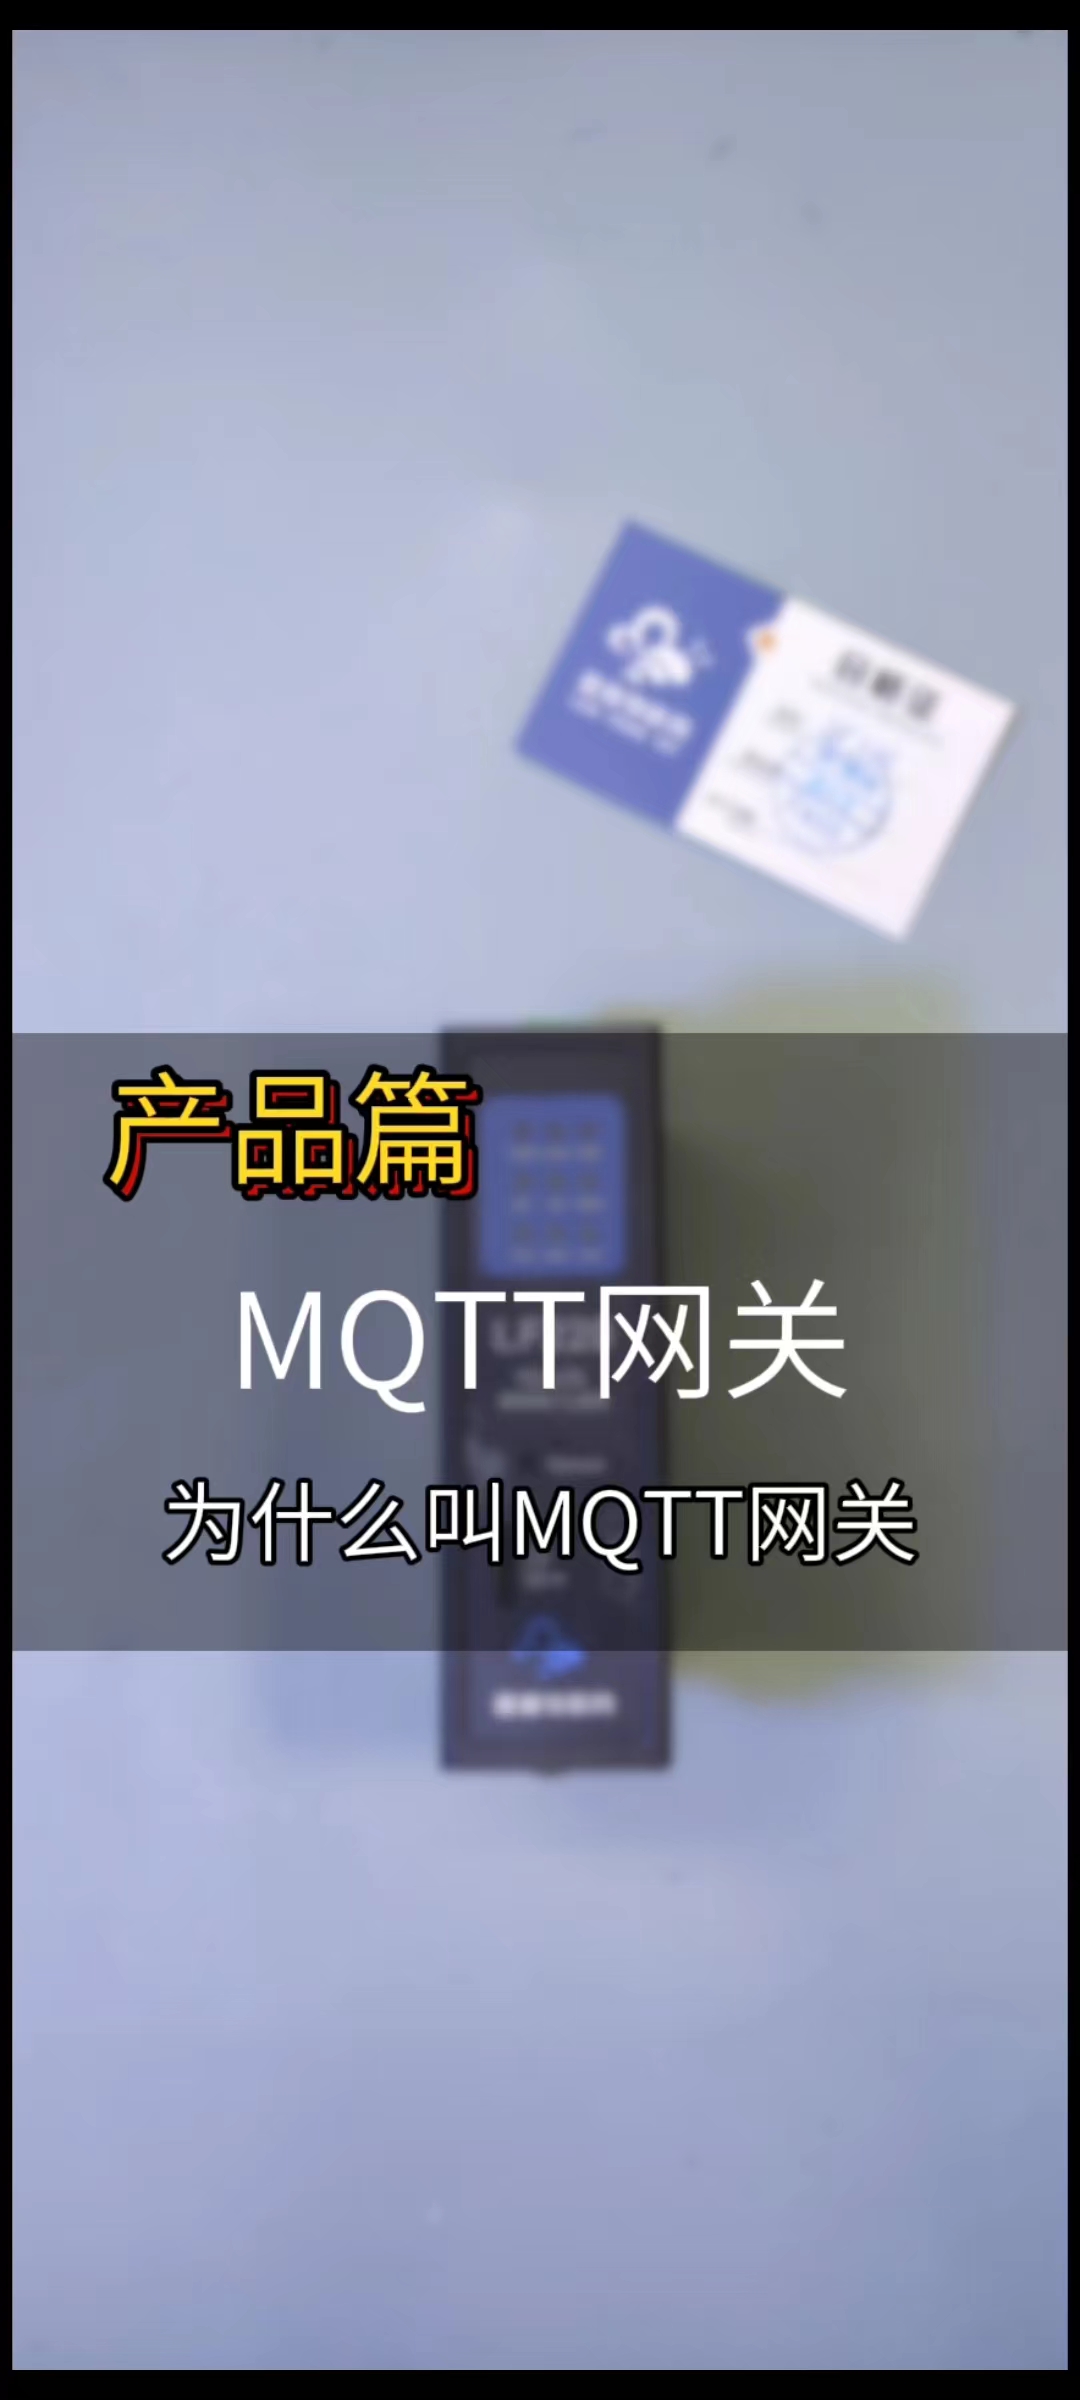 MQTT网关为什么叫MQTT网关呢，因为它可以对接所有的MQTT服务器 #plc #工控 #制造业 #自动化 